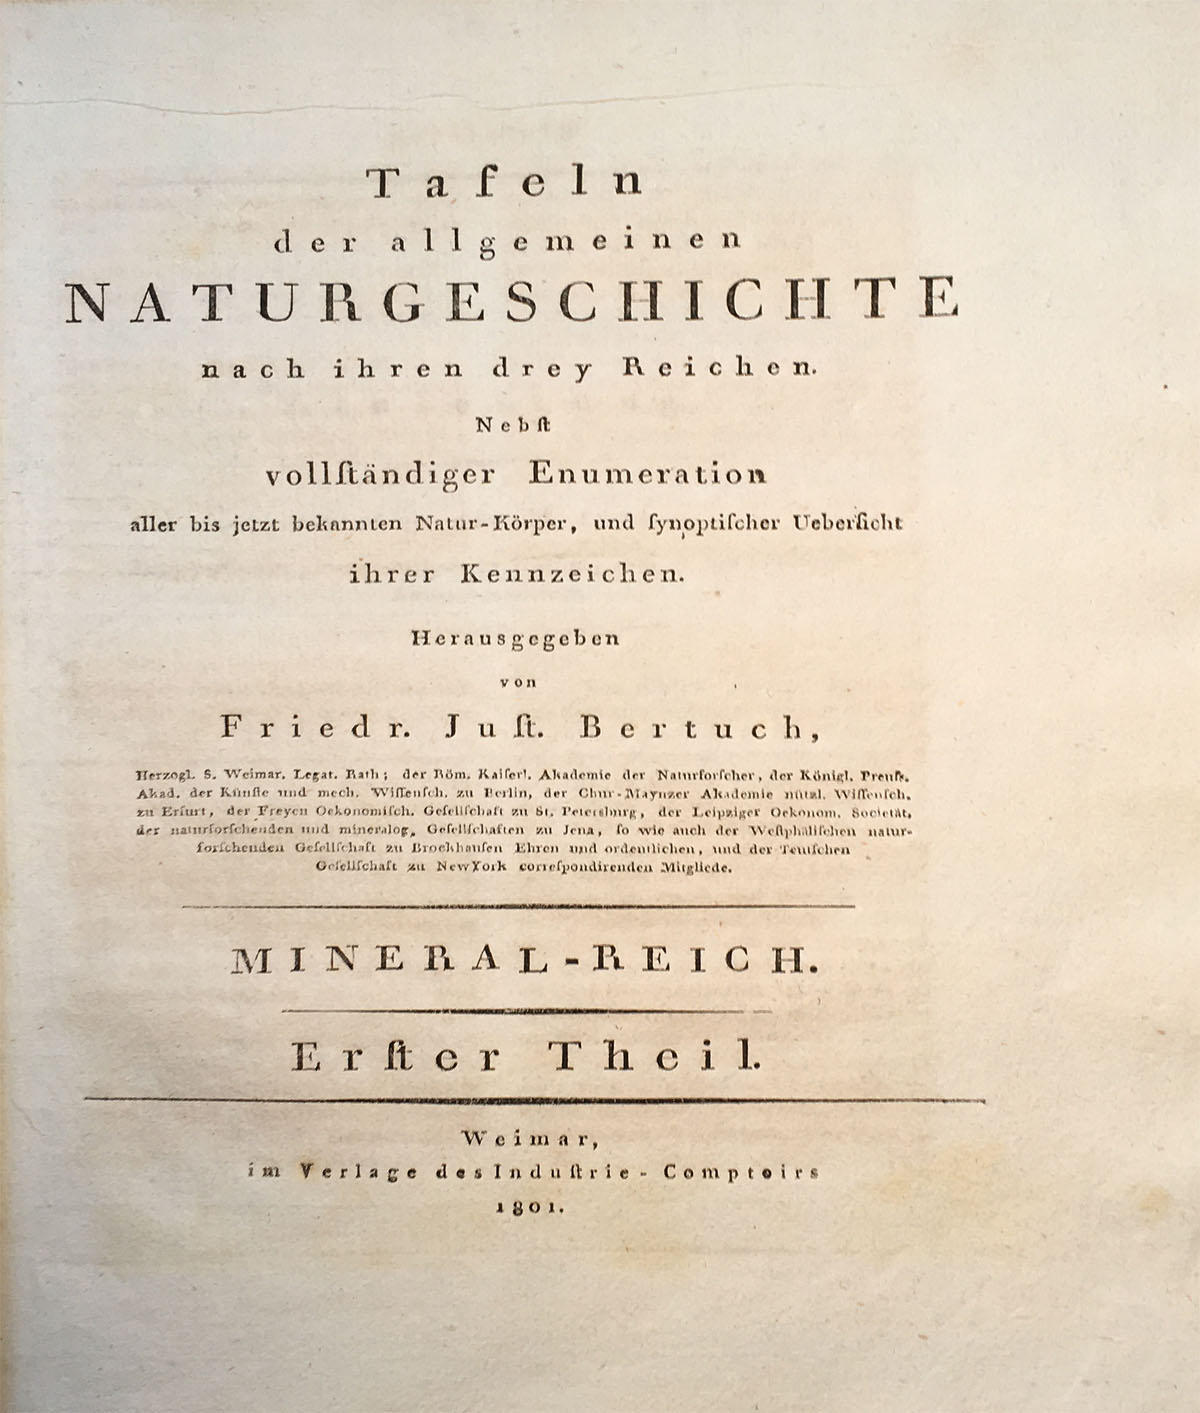 Bertuch, Friedrich Justin (1801)